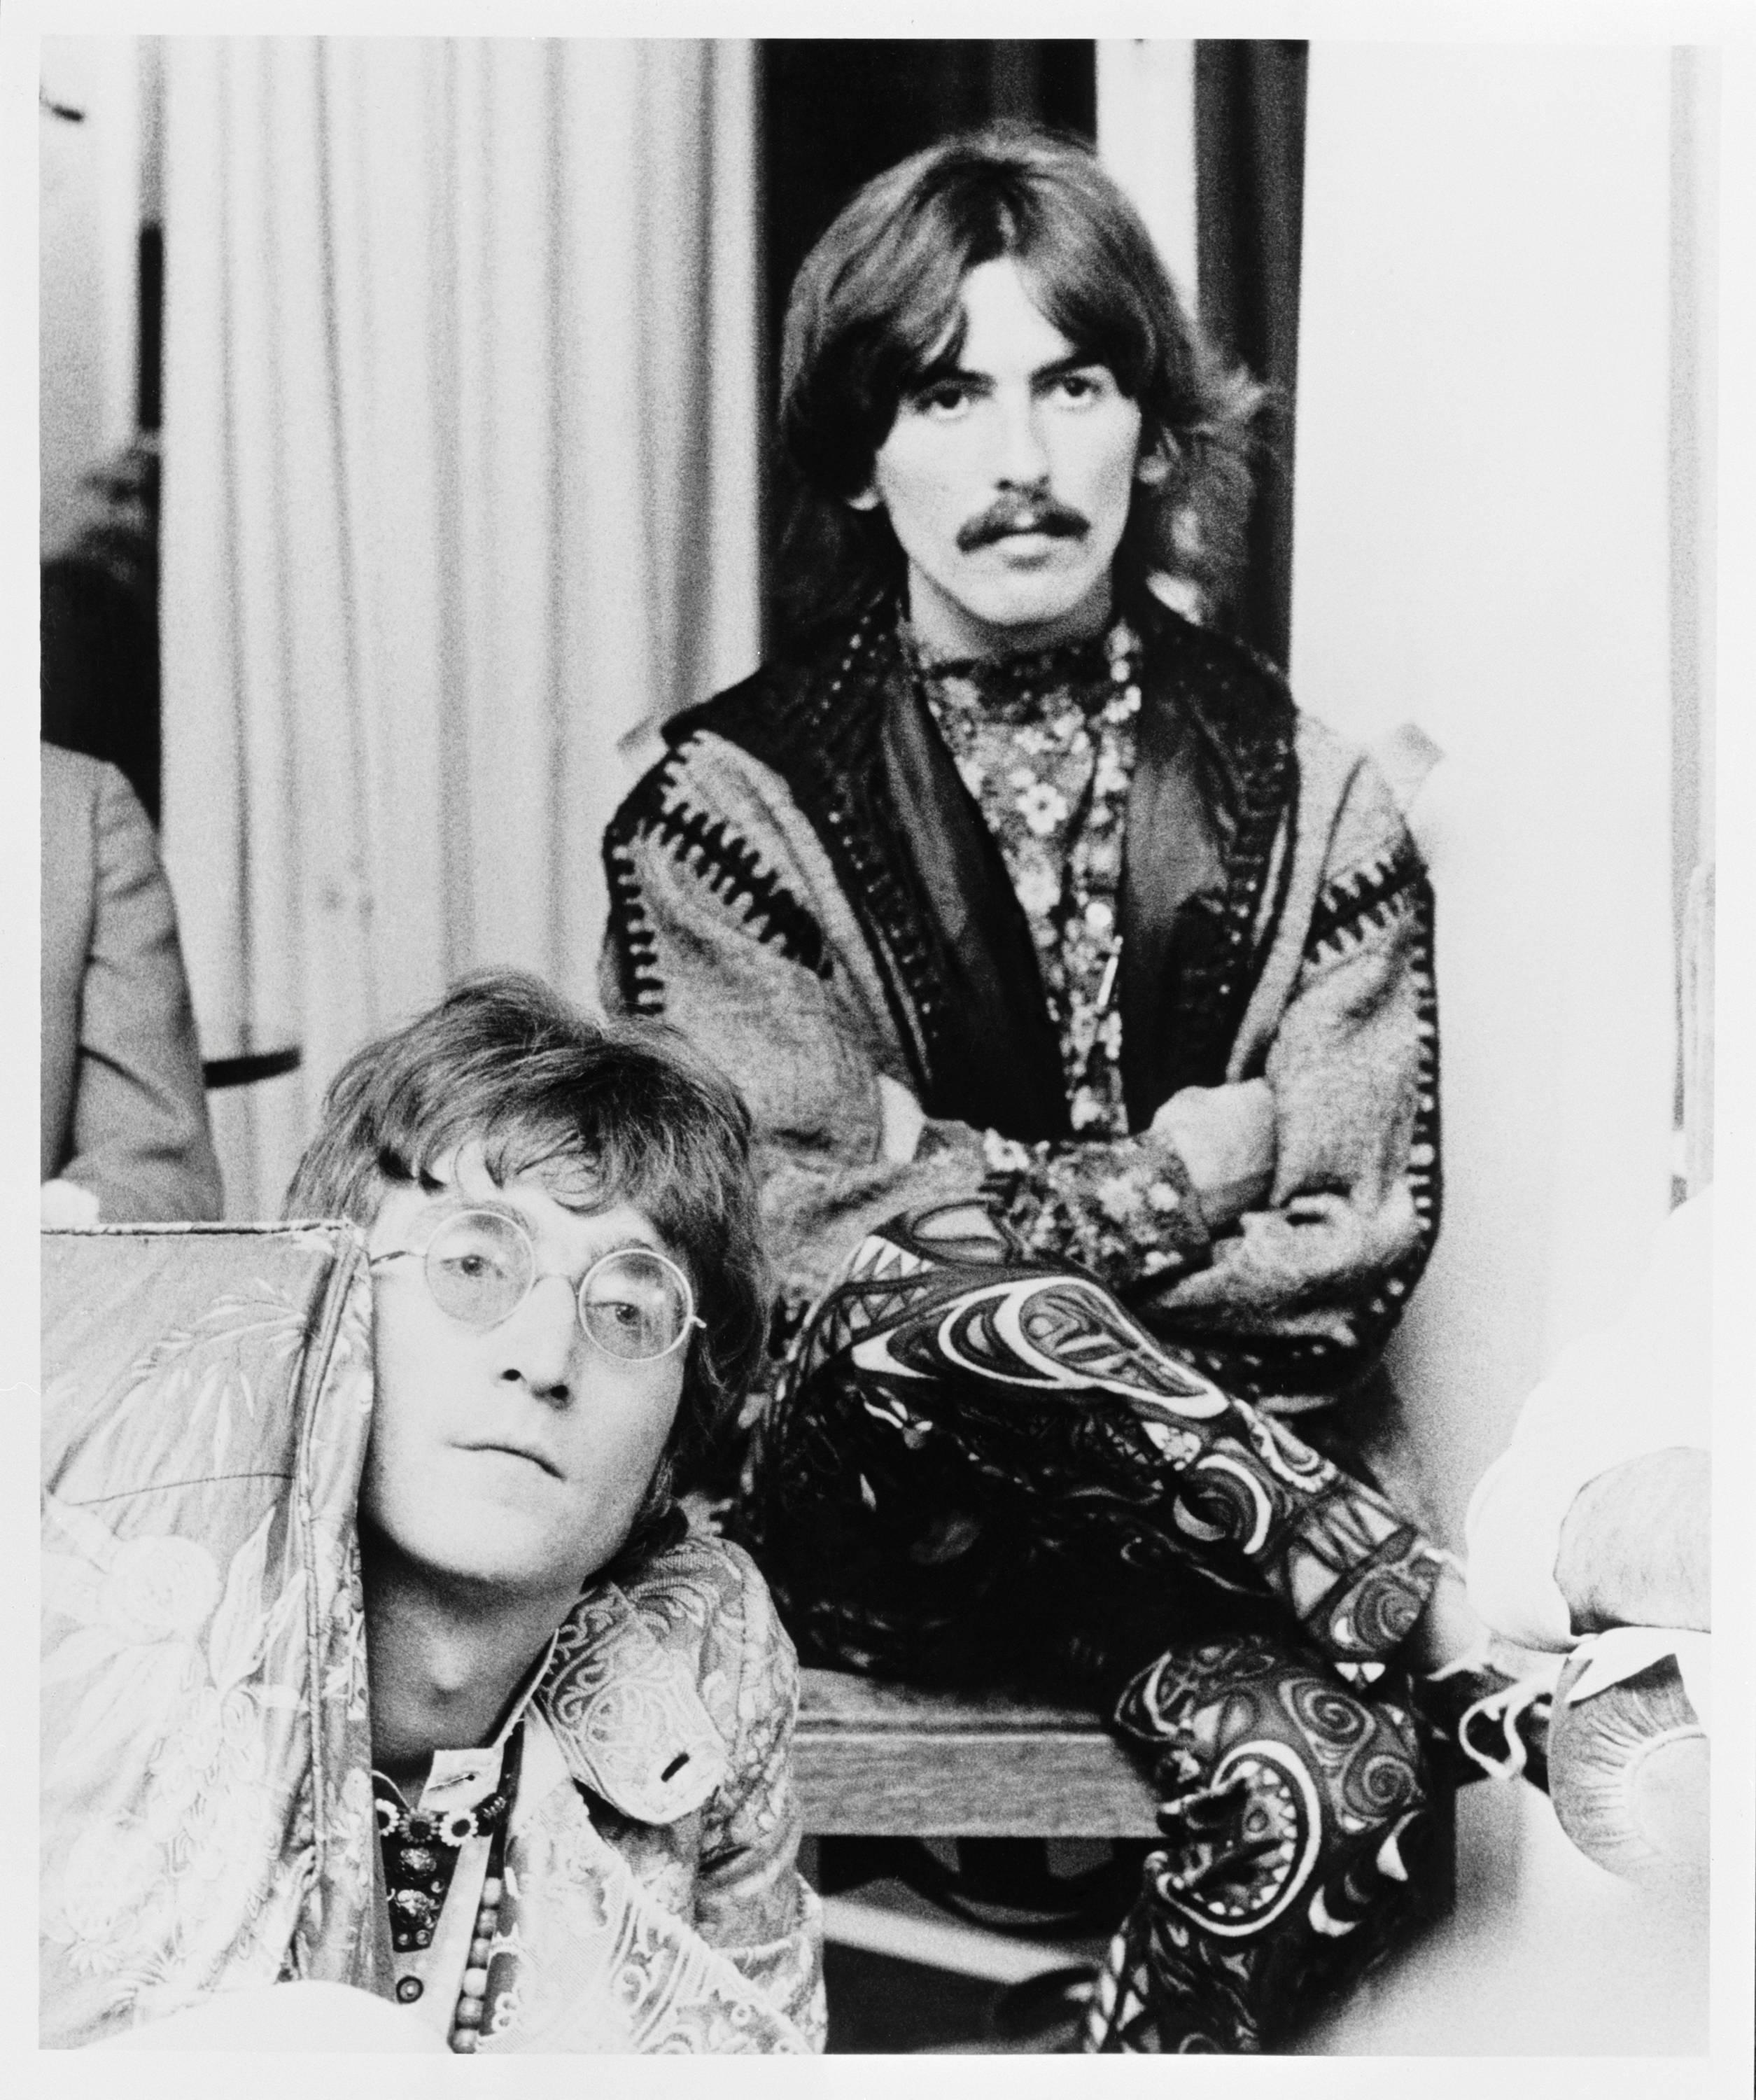 John Lennon and George Harrison